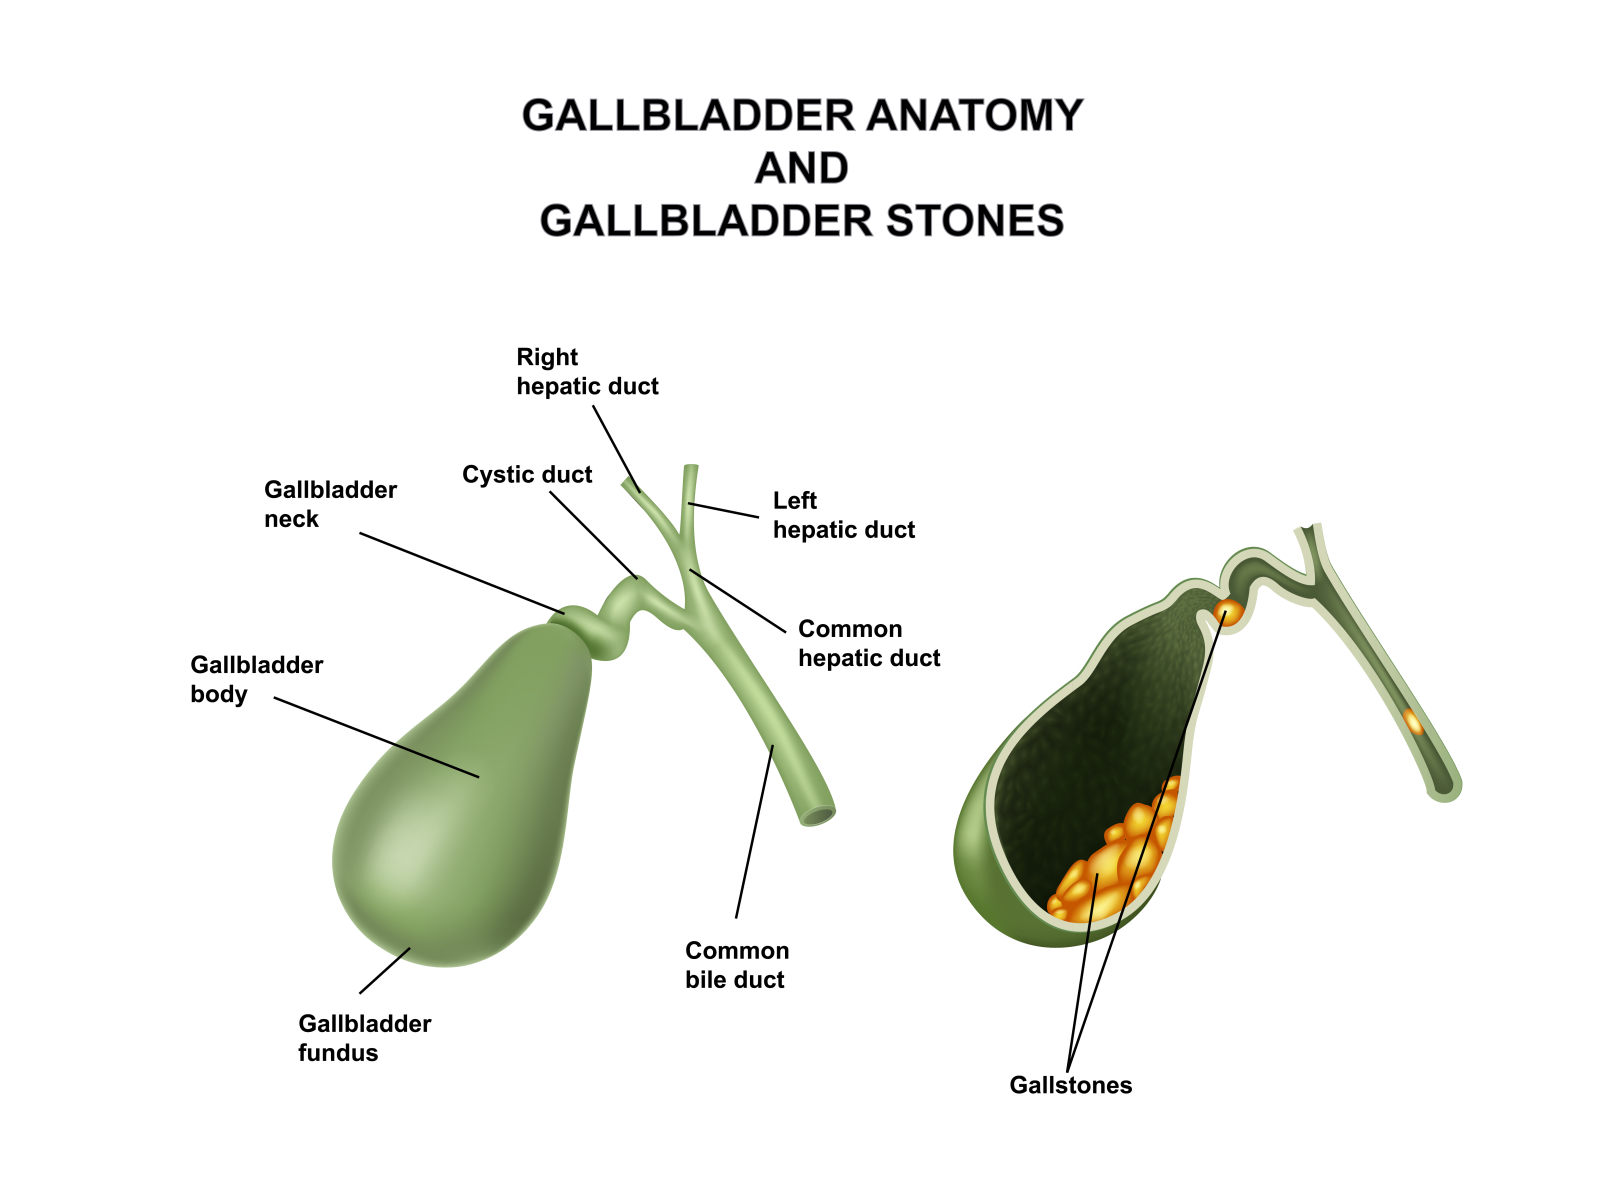 Human gallbladder by Tigatelu on Dribbble